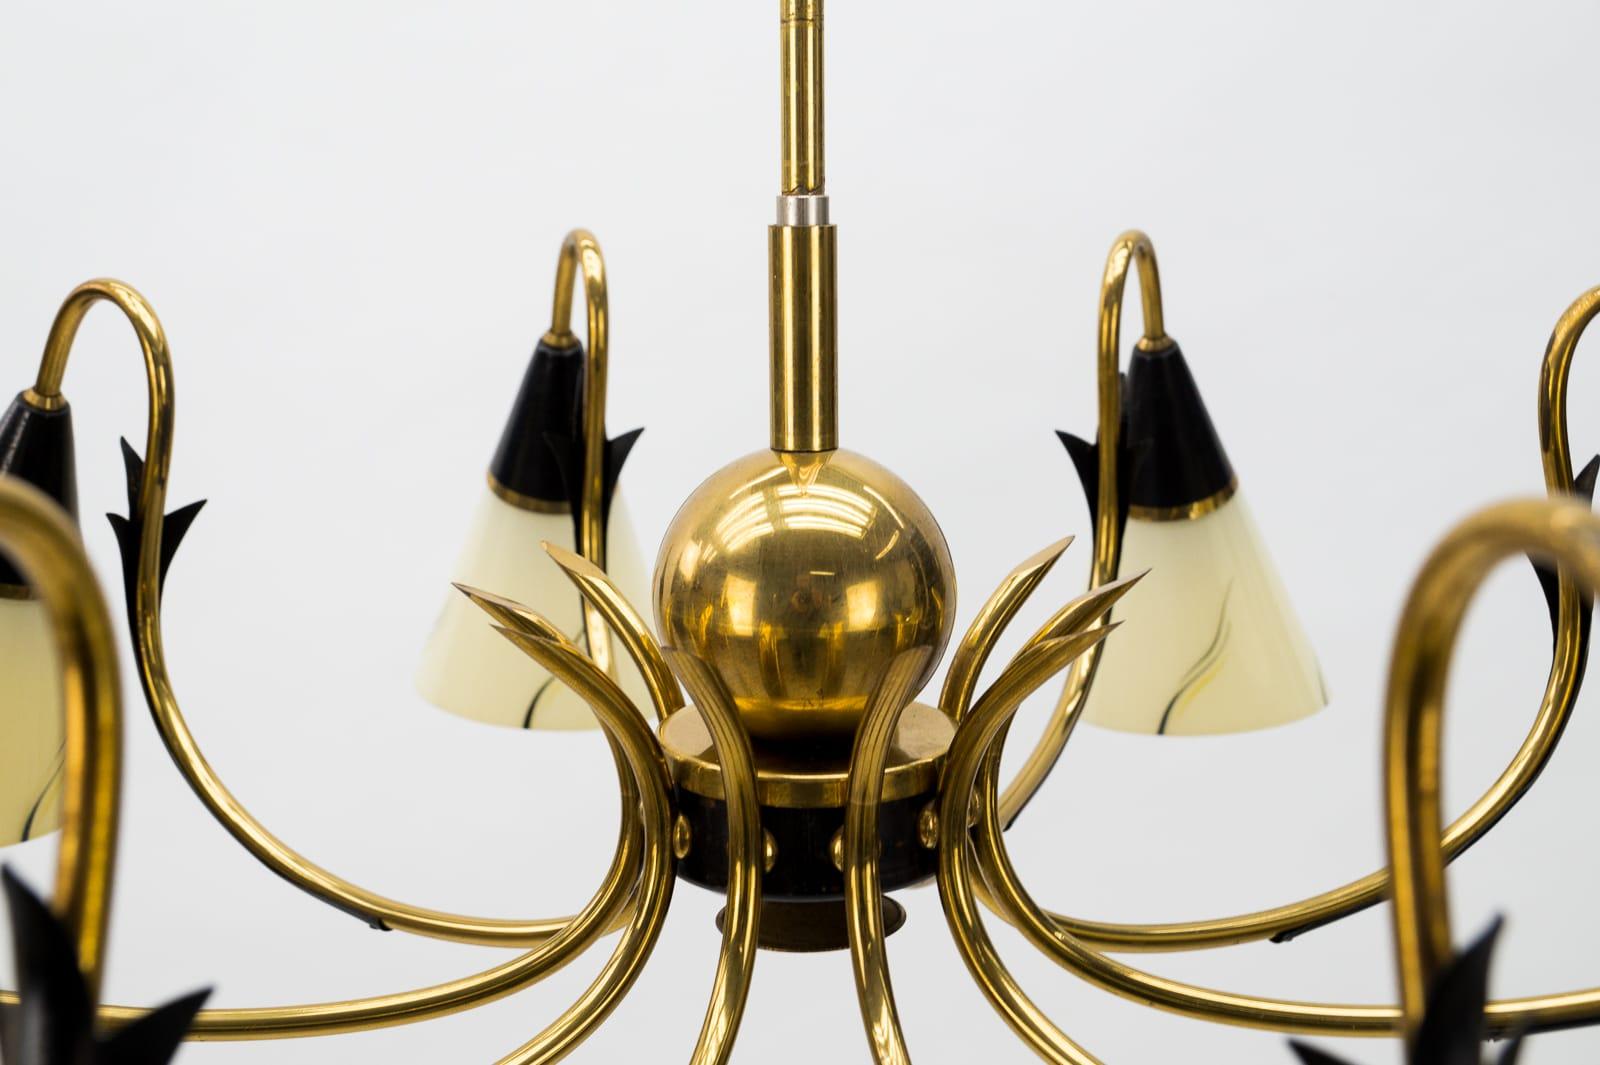 Italian Brass & Glass Sputnik Chandelier with 10 Lights, 1950s For Sale 4